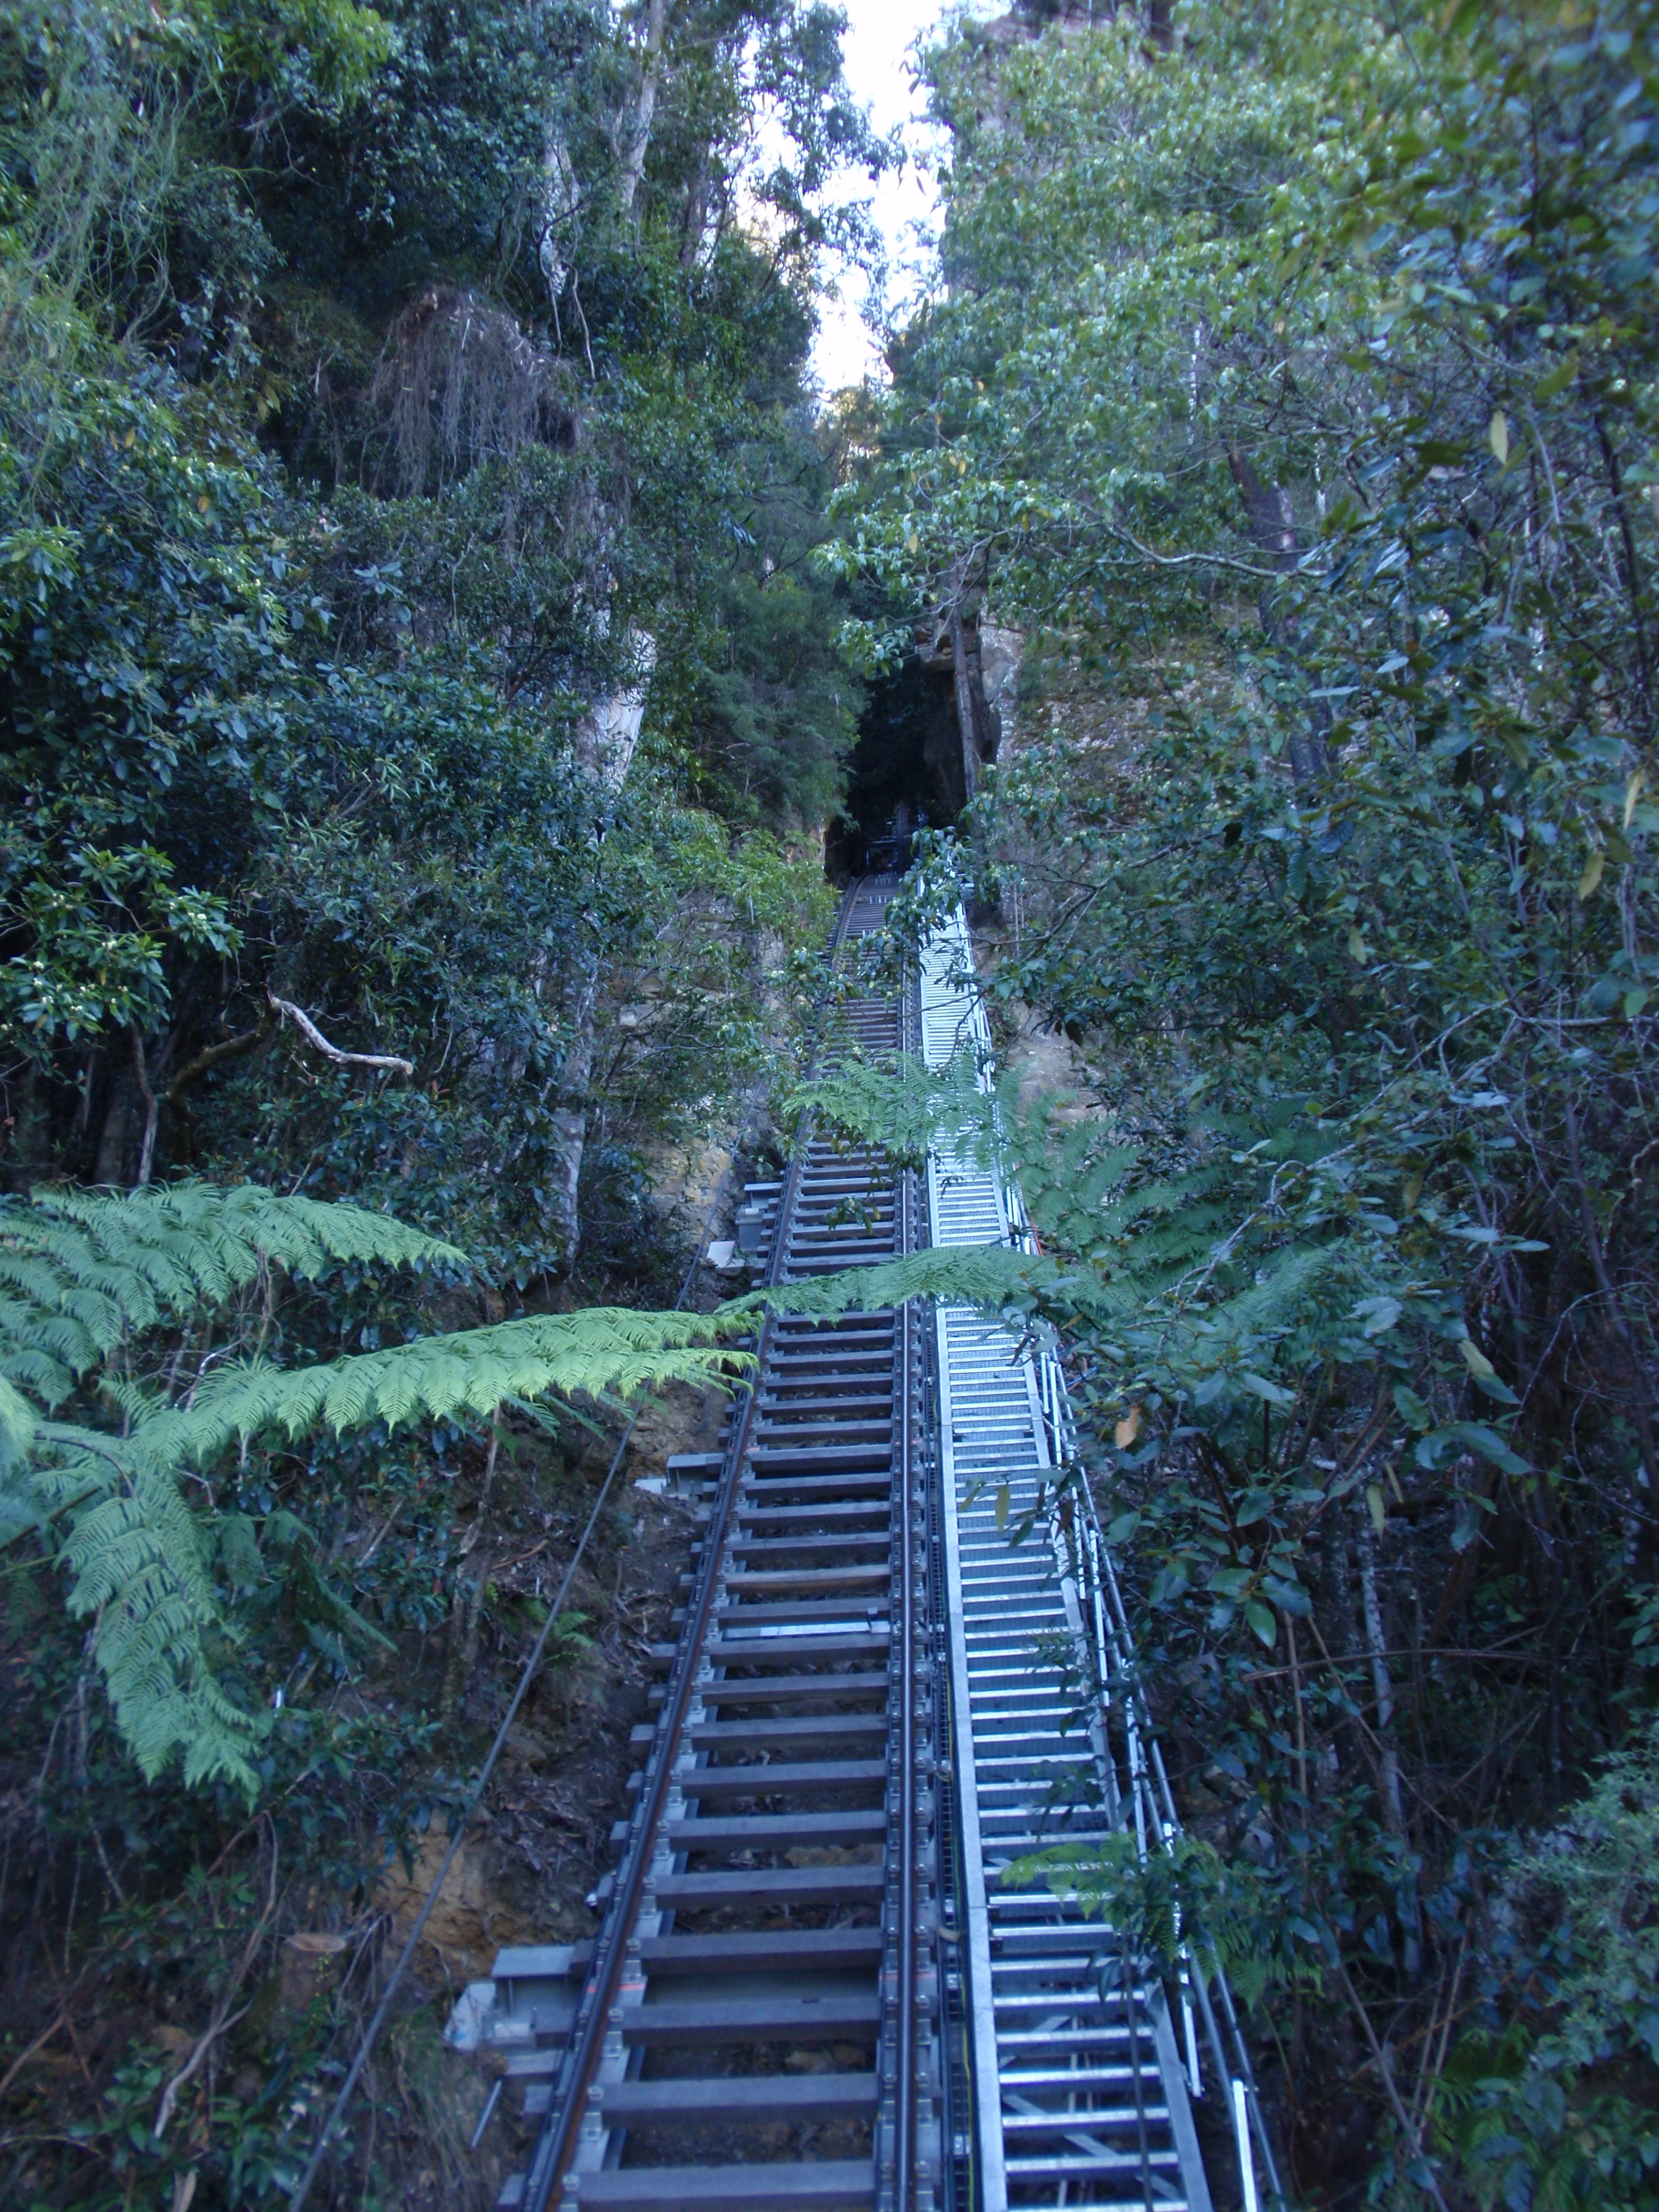 Scenic Railway uphill climb